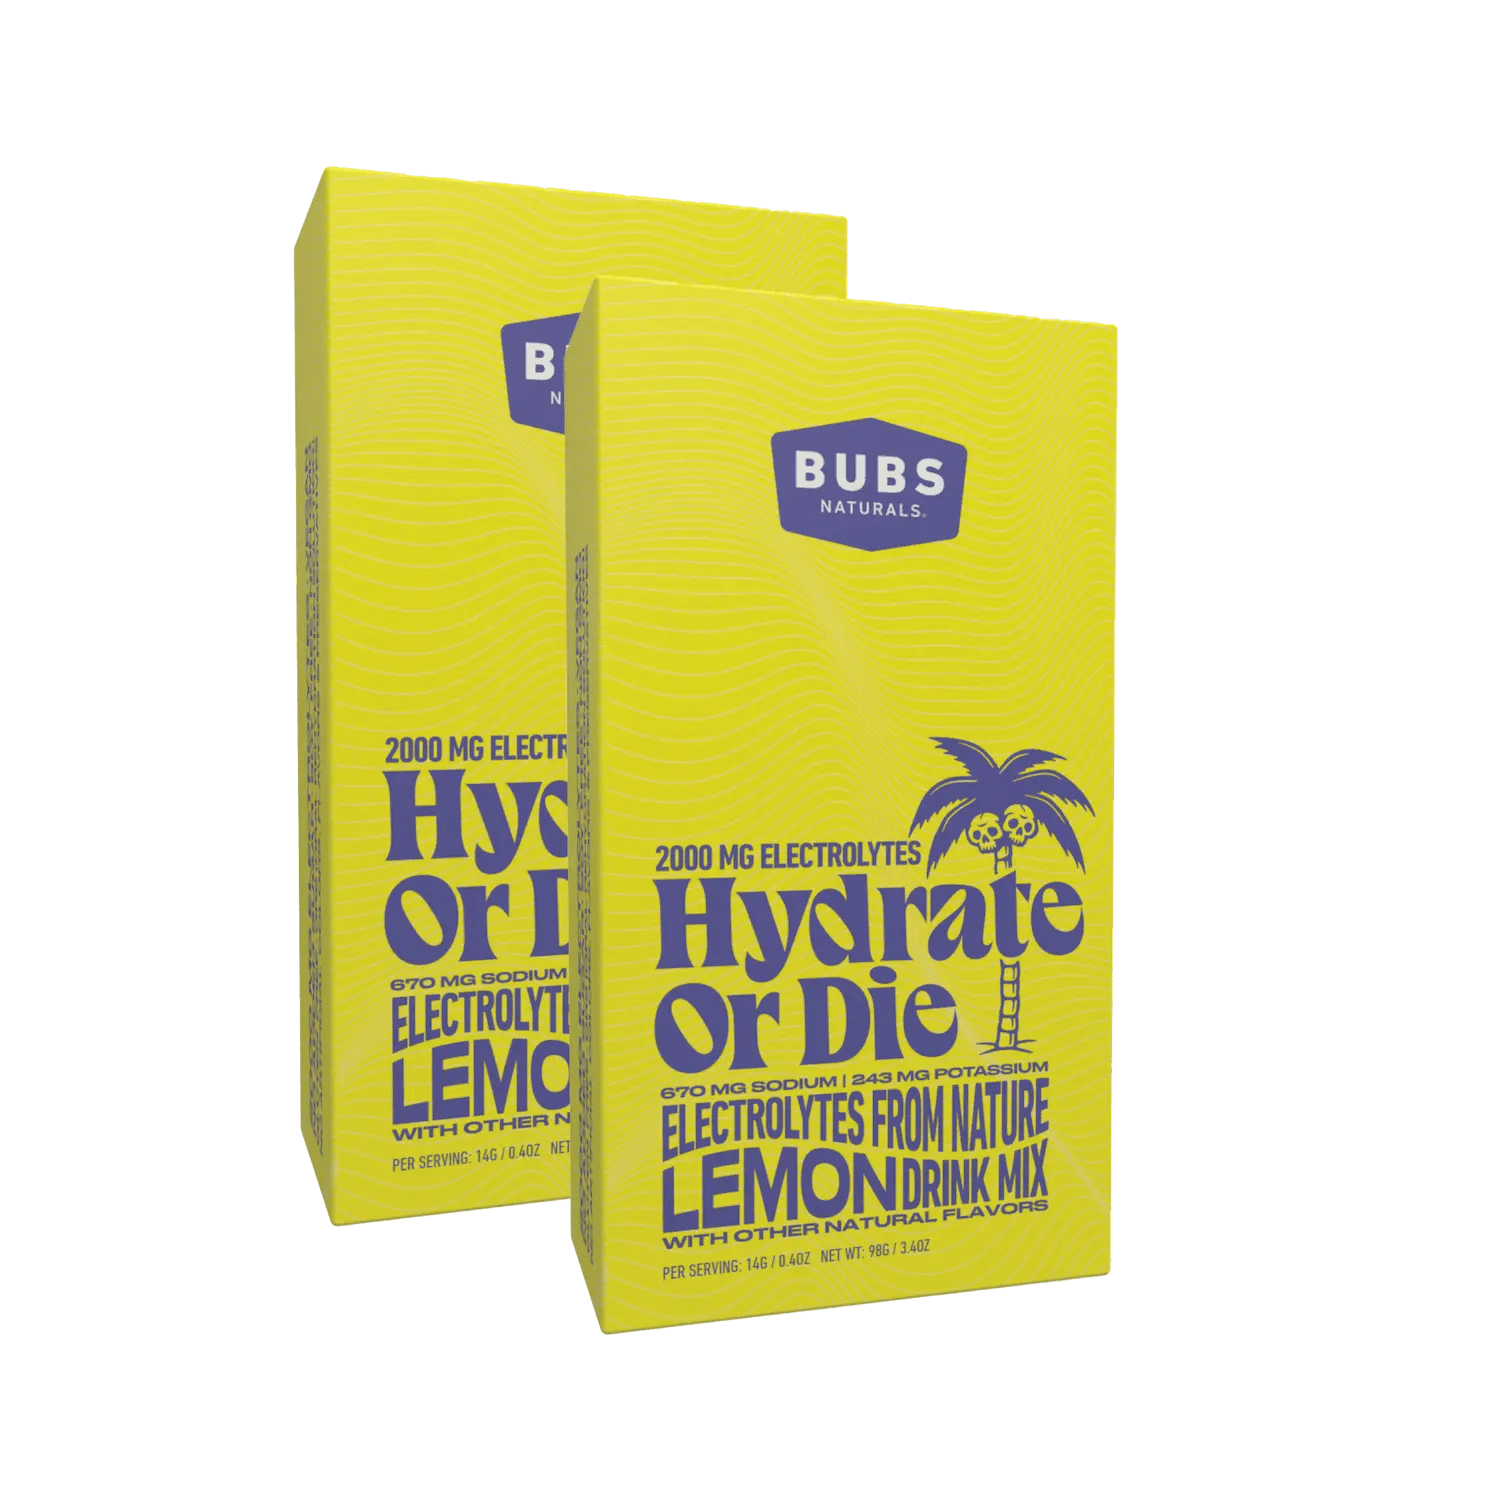 BUBS Naturals Hydrate or Die Electrolyte Cartons, Lemon, bundle of 2